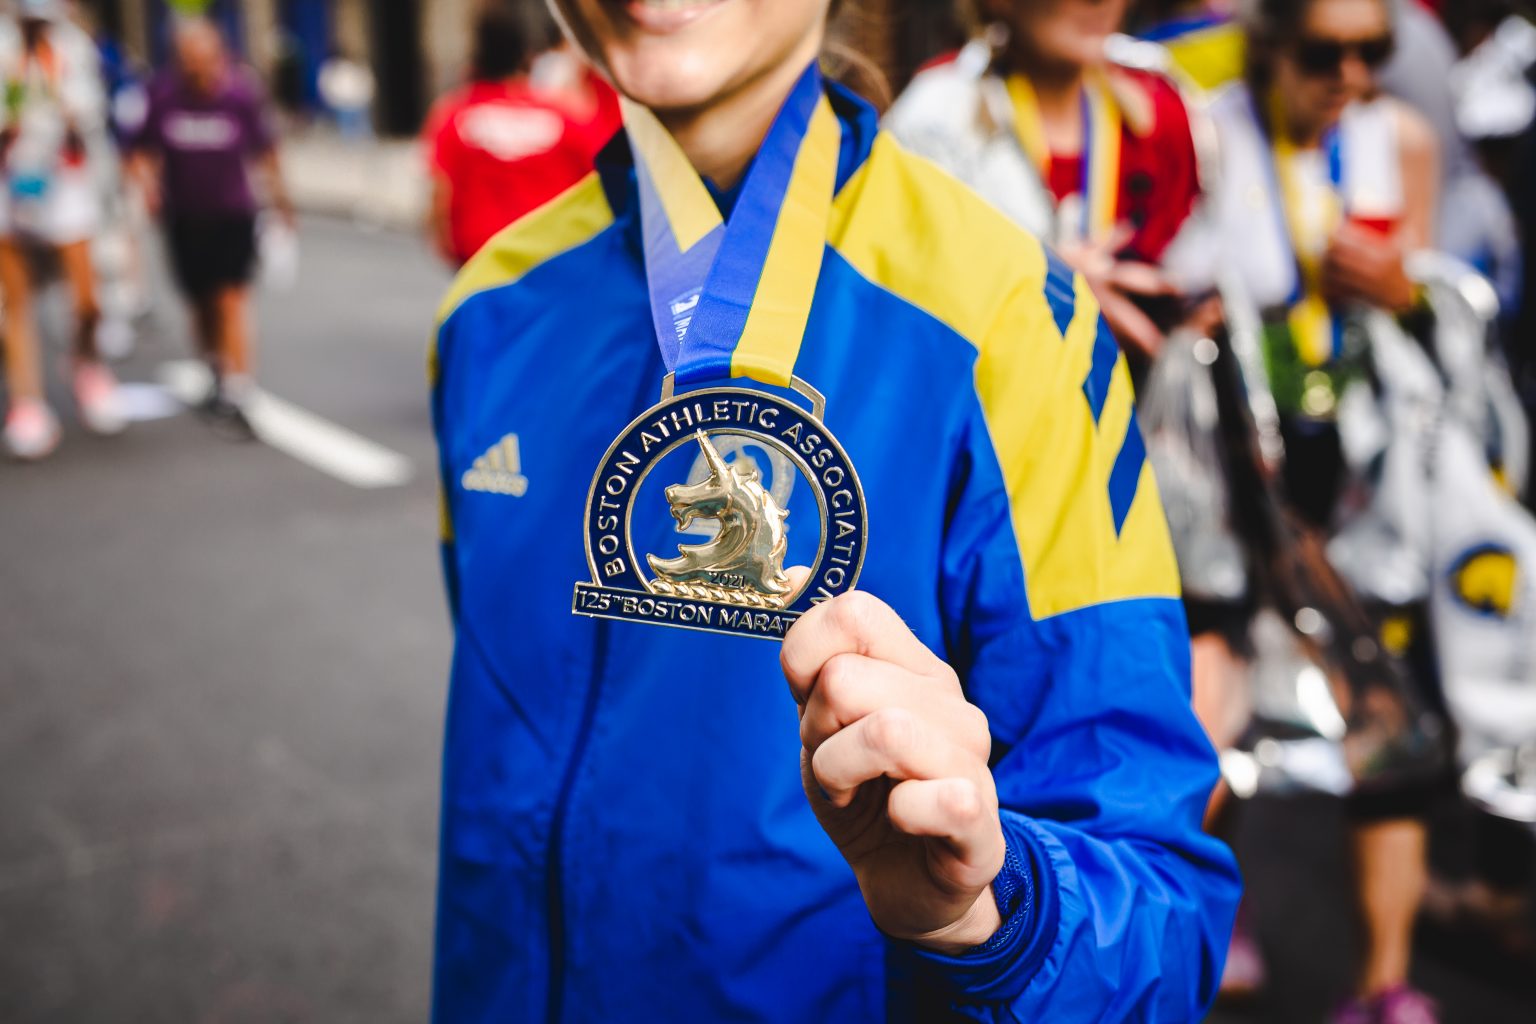 Boston Marathon Finish Line Tips